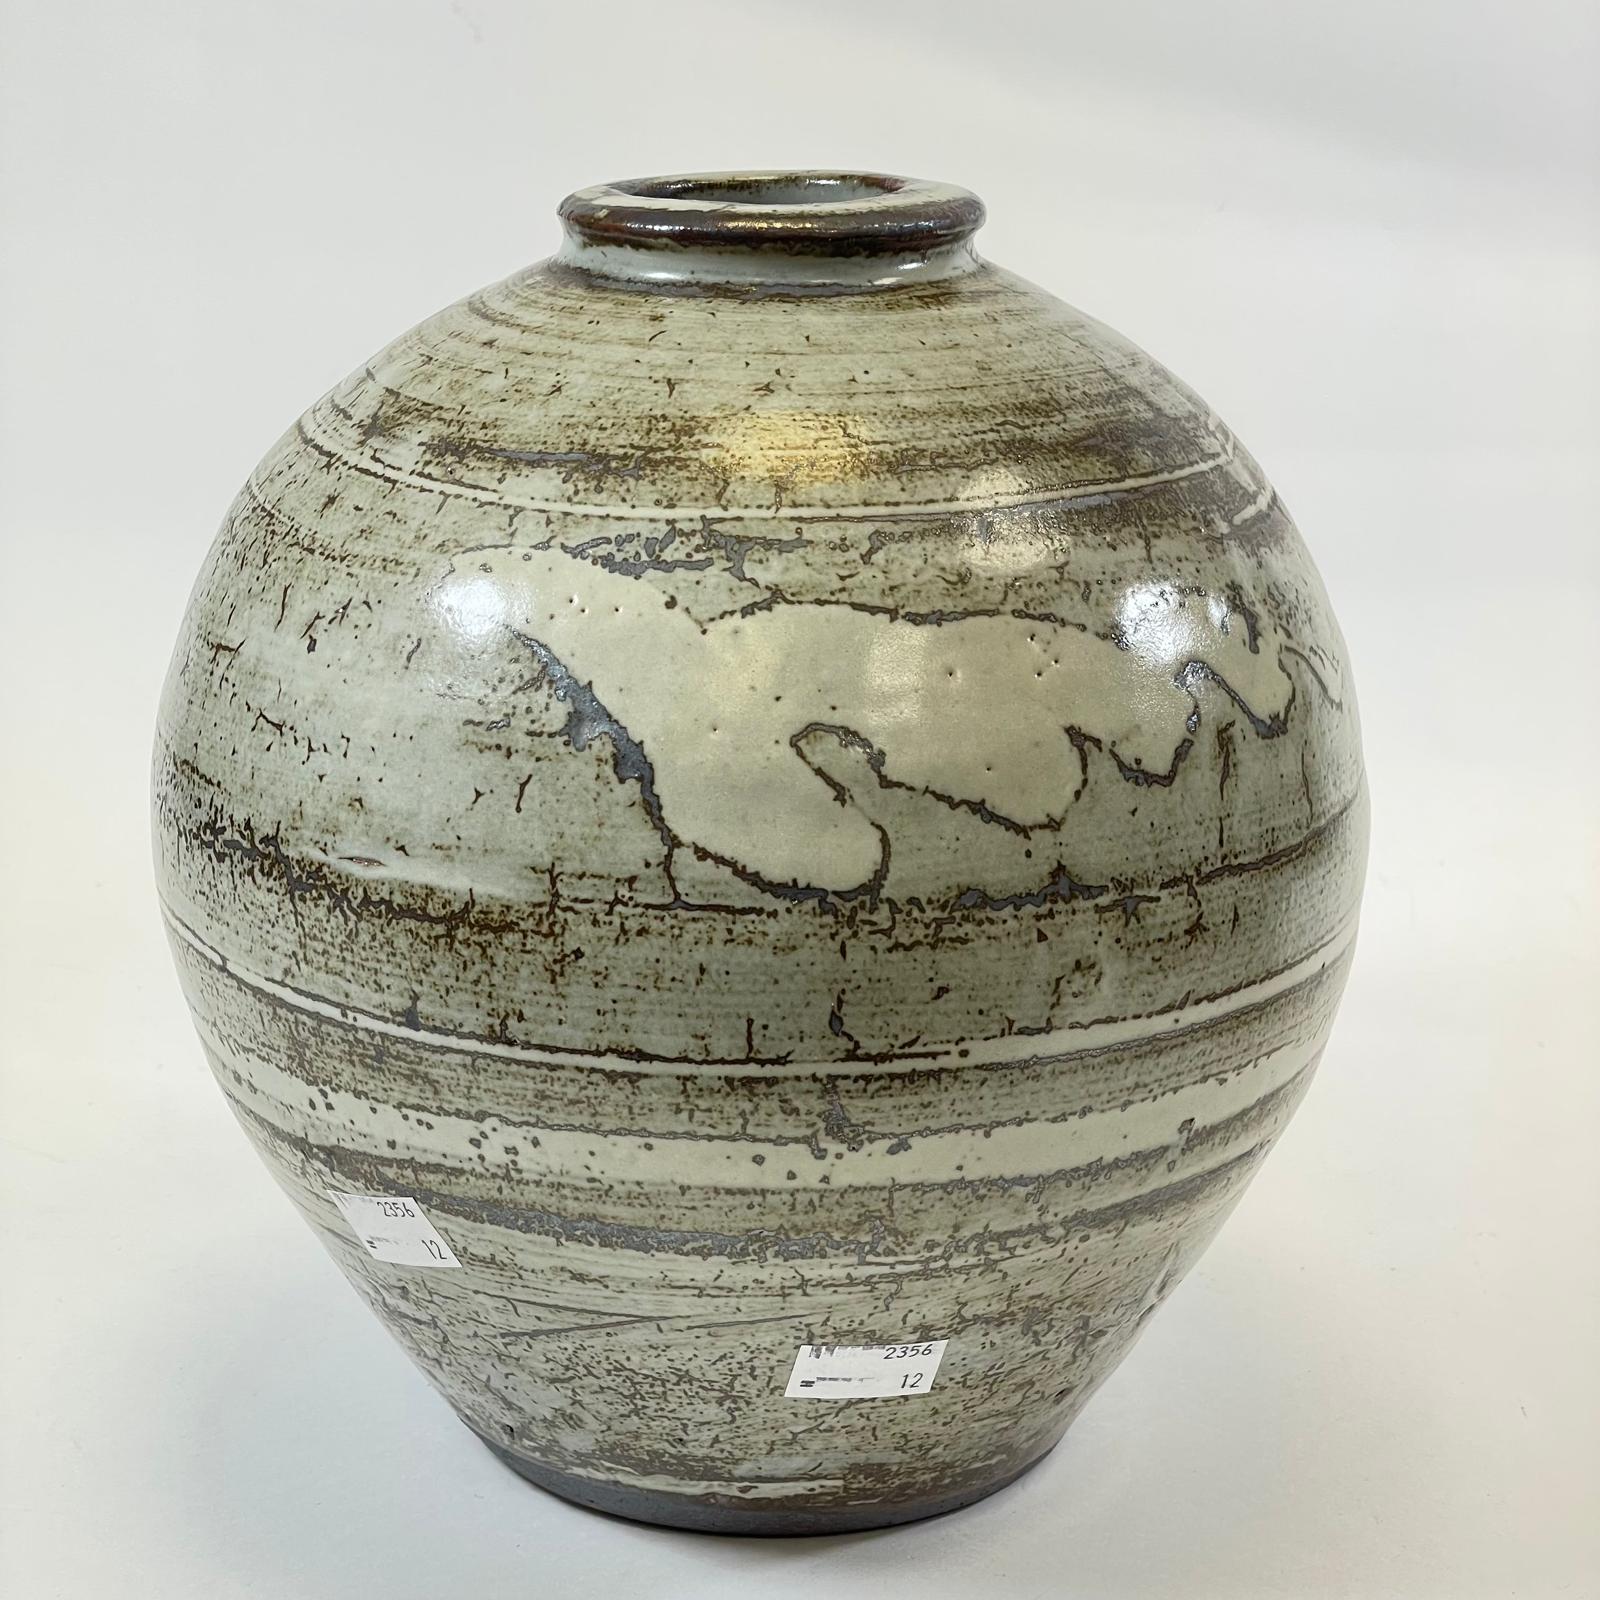 Bernard Leach Stoneware Vase Impressed Marks Probably BL & St Ives Marks  Marks Obscured. Height: - Image 3 of 6